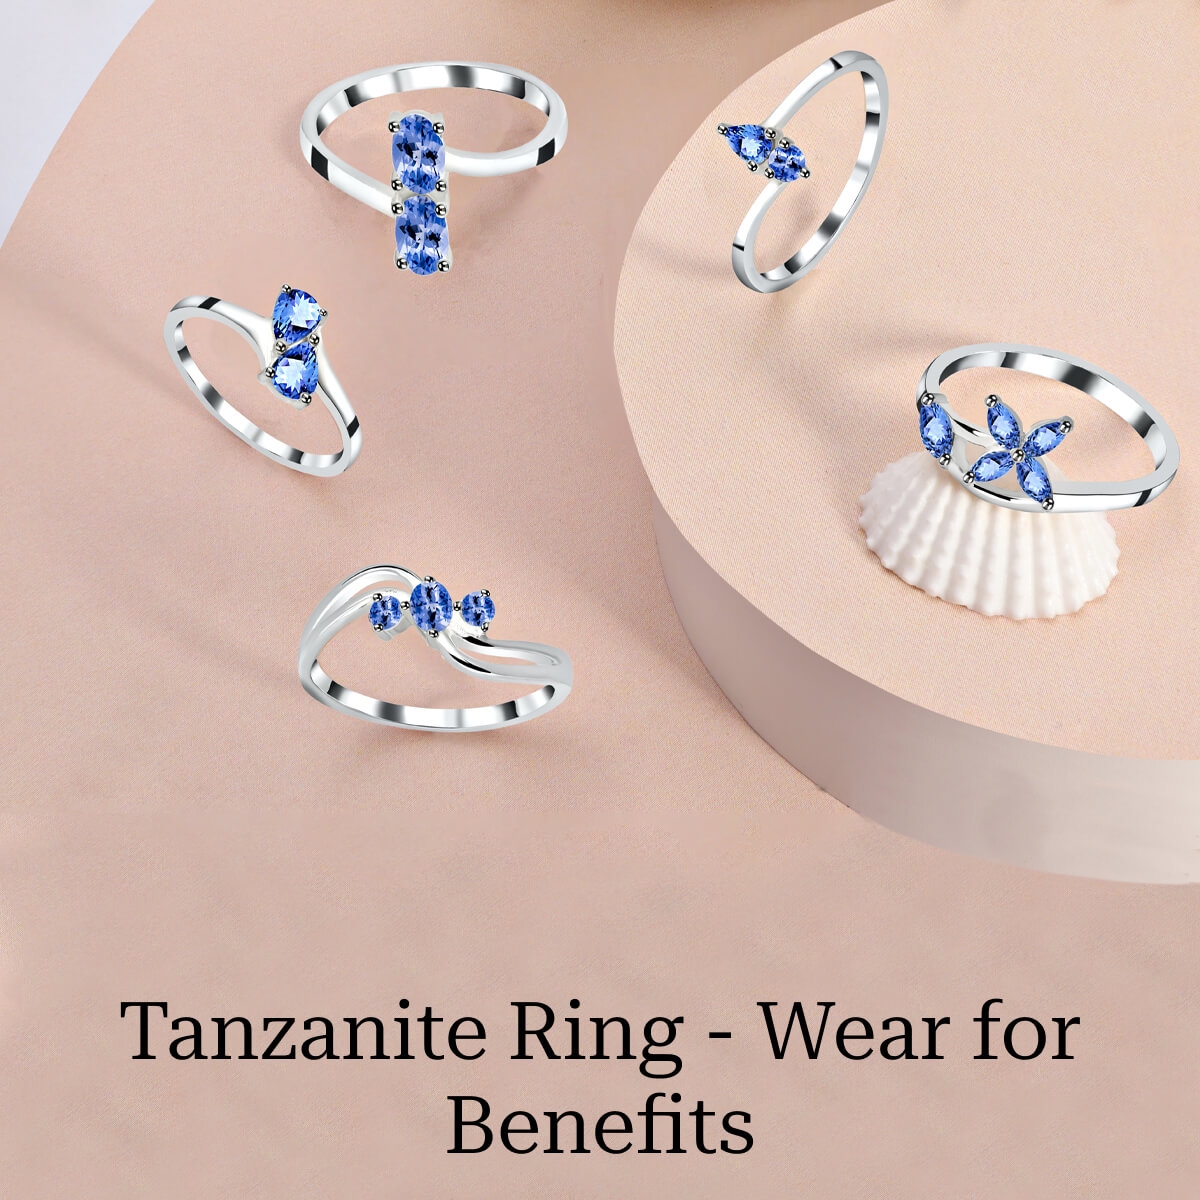 Benefits of wearing the Tanzanite ring